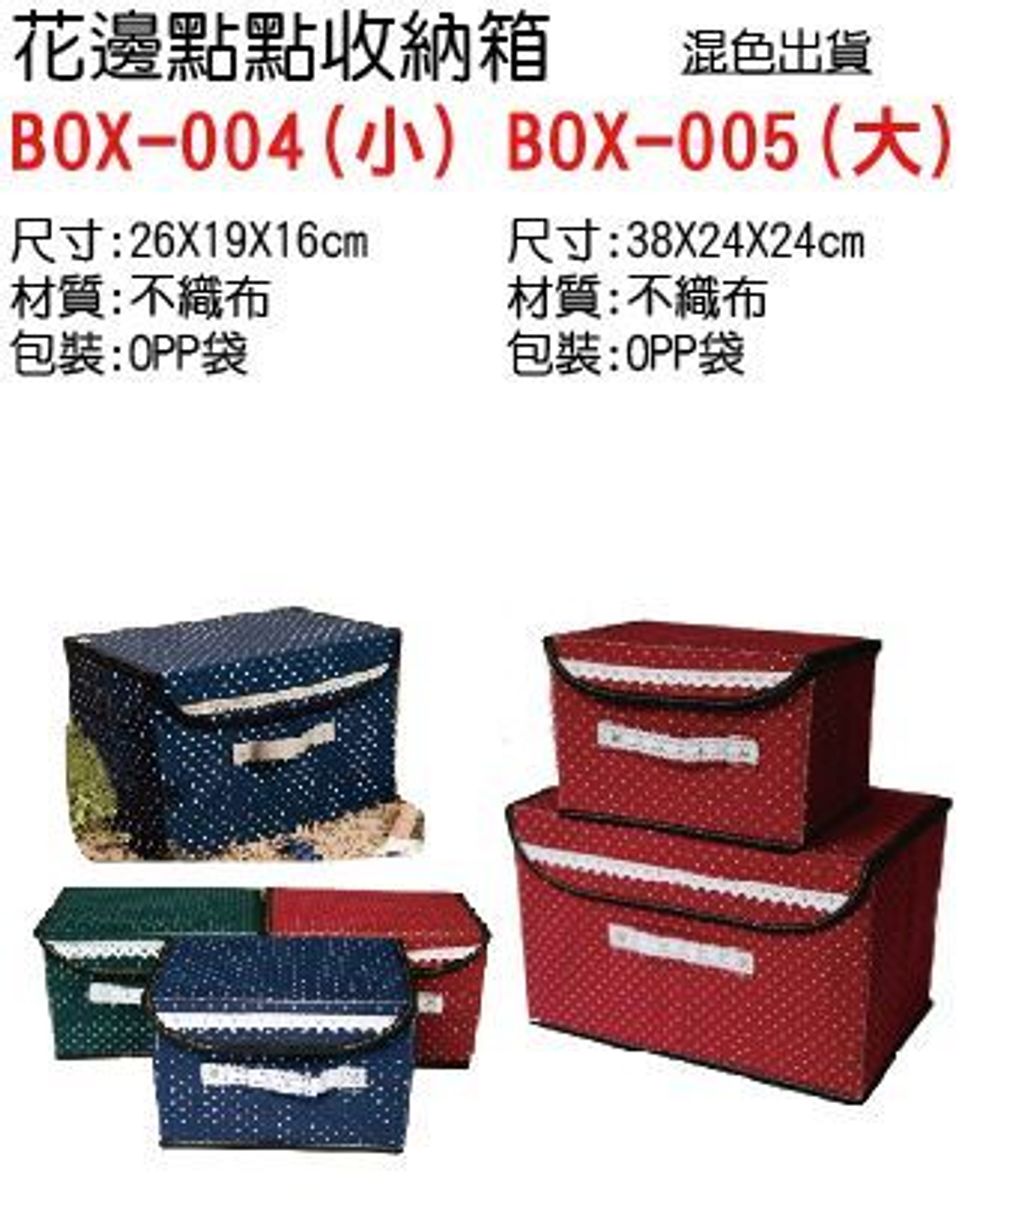 BOX-004.BOX-005.JPG